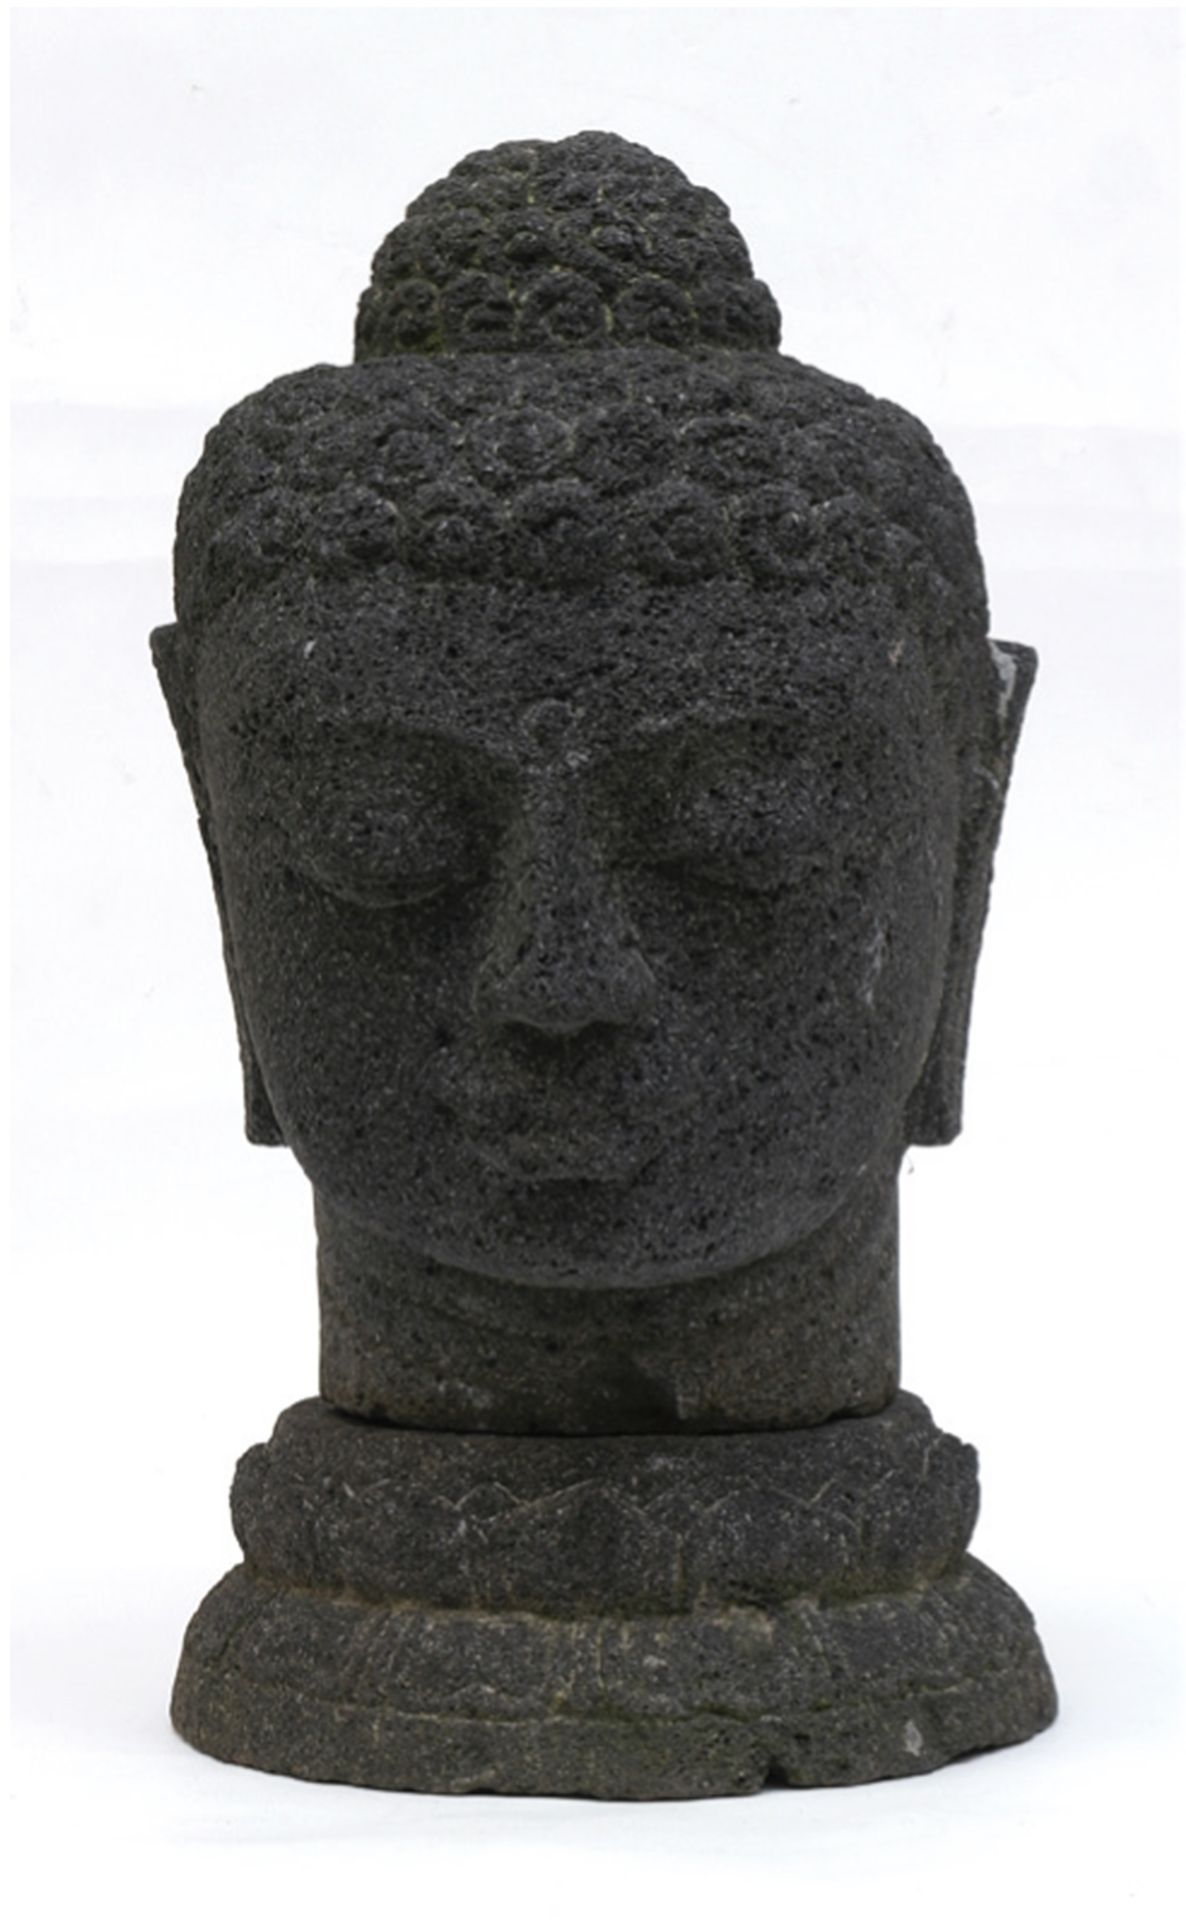 Gartenfigur "Buddhakopf, um 1980, Basalt-Steinguß, auf rundem Sockel, Sockelhöhe 9 cm, Gesamthöhe 4